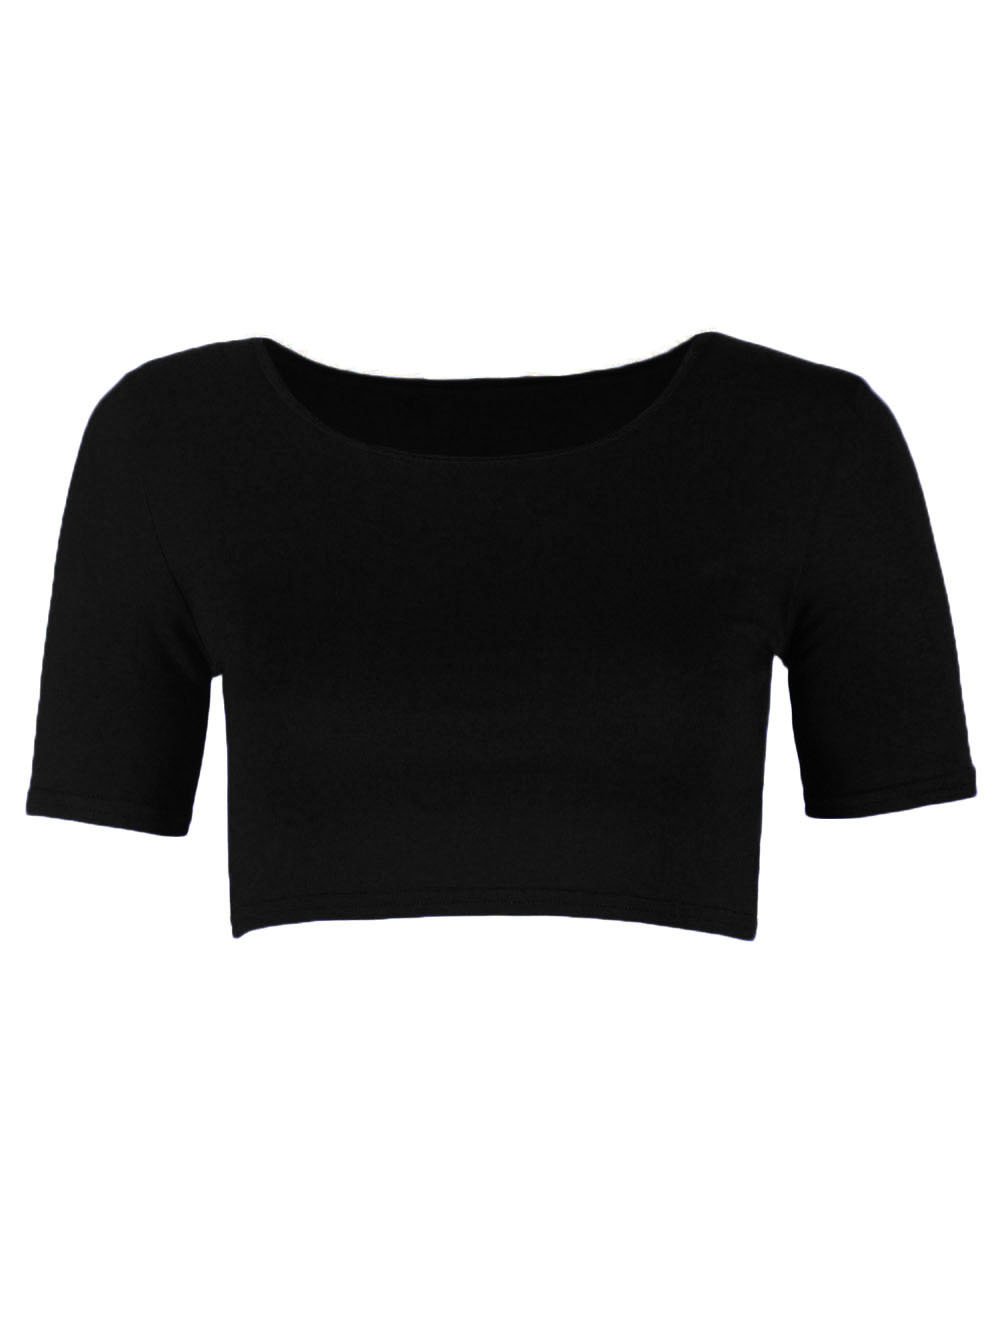 Black Plain Short Sleeve Mini Crop T Shirt Bra